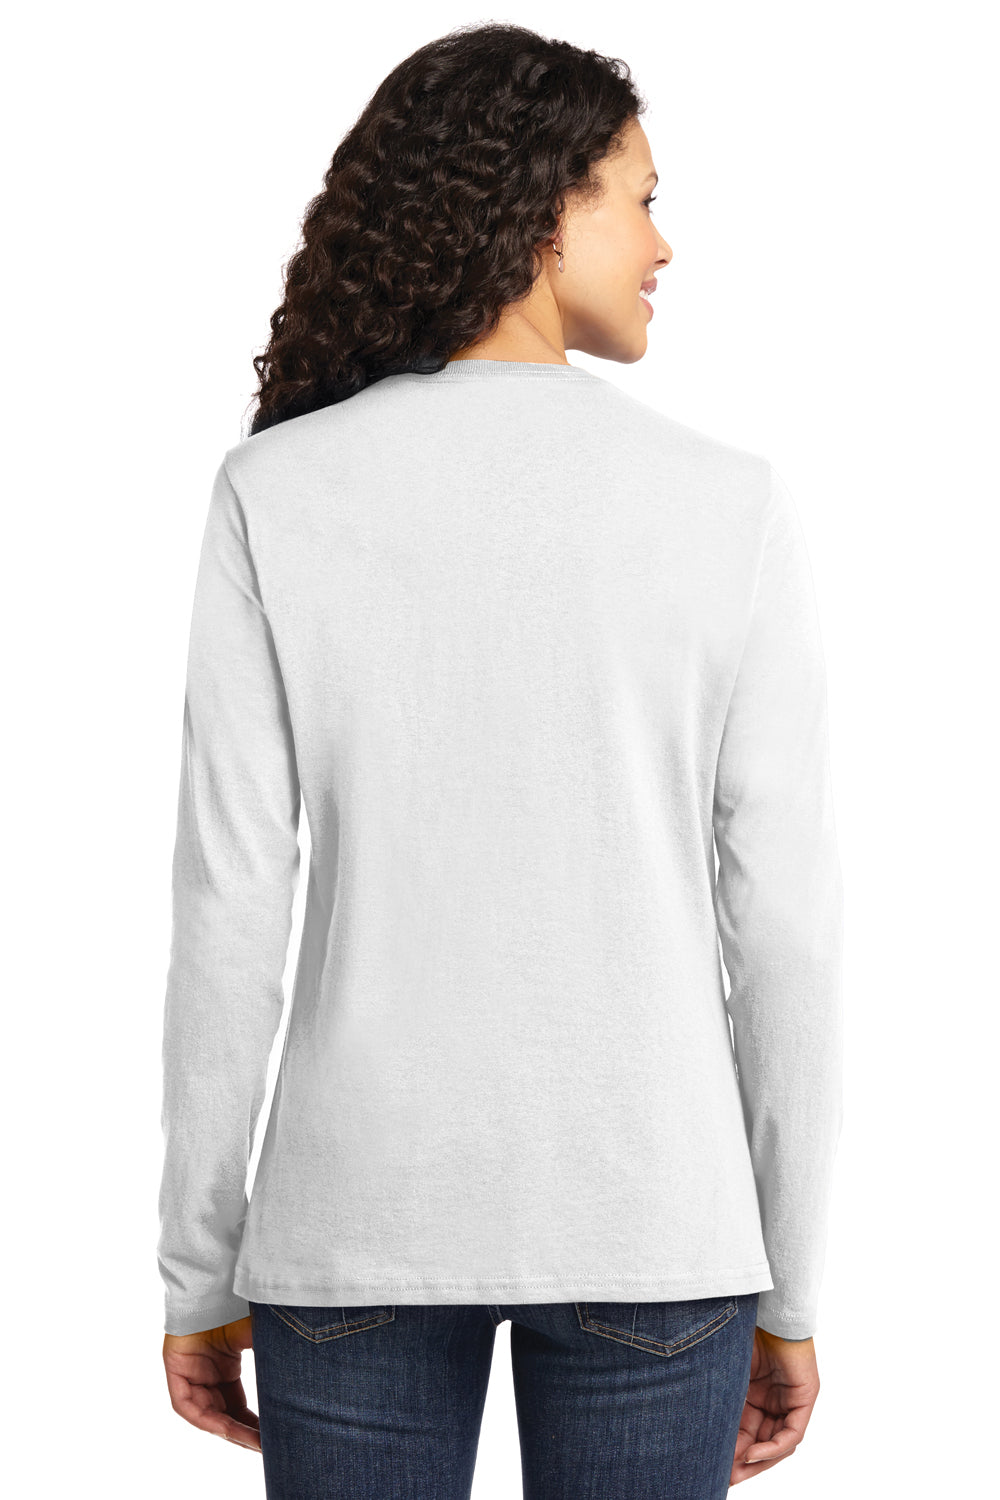 Port & Company LPC54LS Womens Core Long Sleeve Crewneck T-Shirt White Back